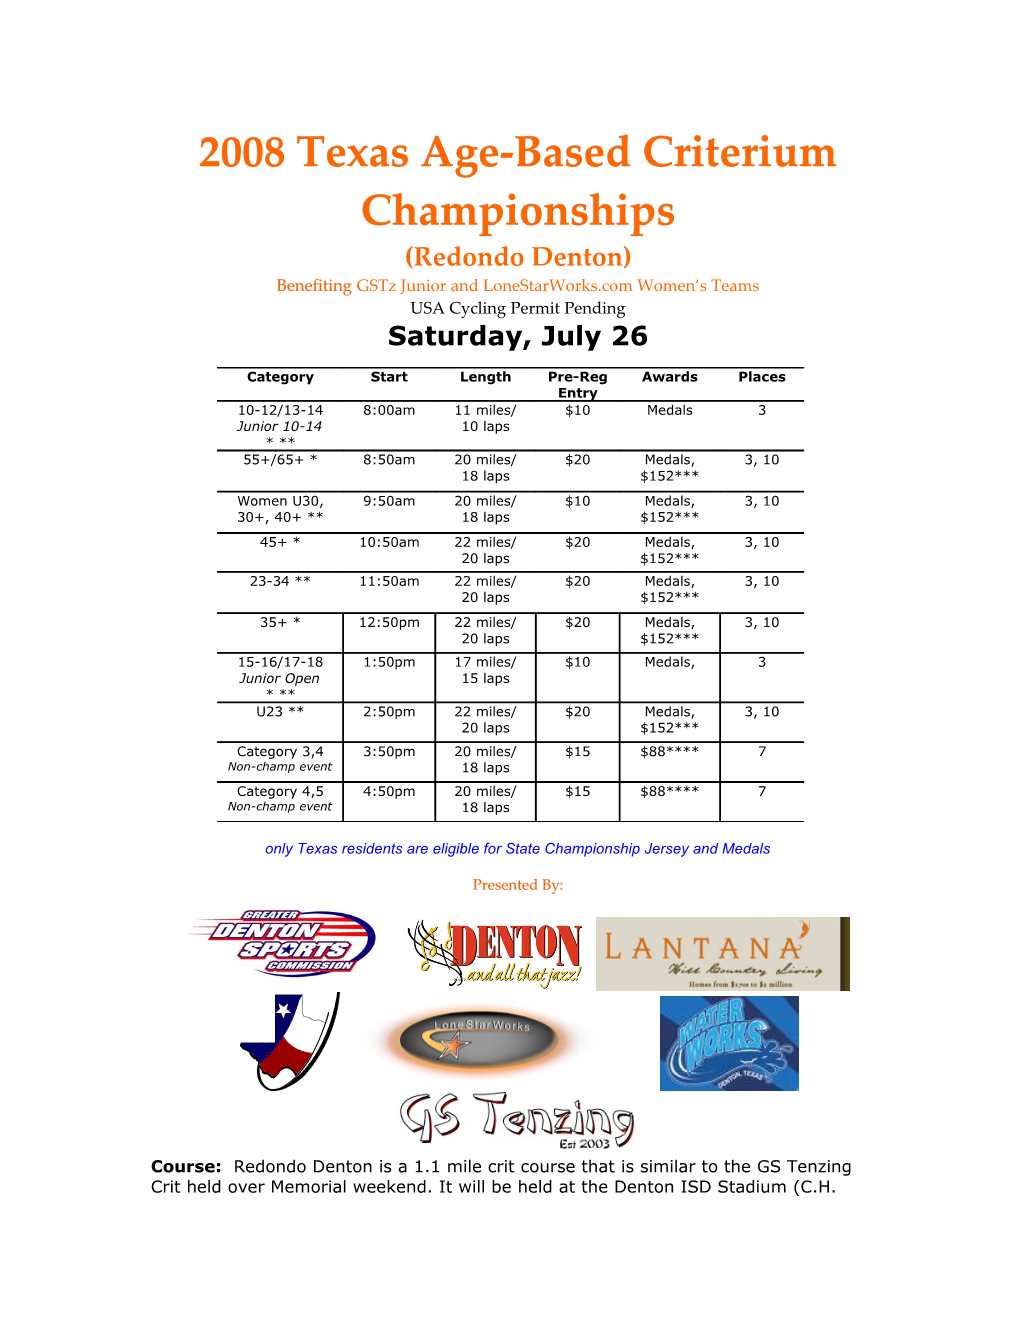 2008 Texas Age-Based Criterium Championships